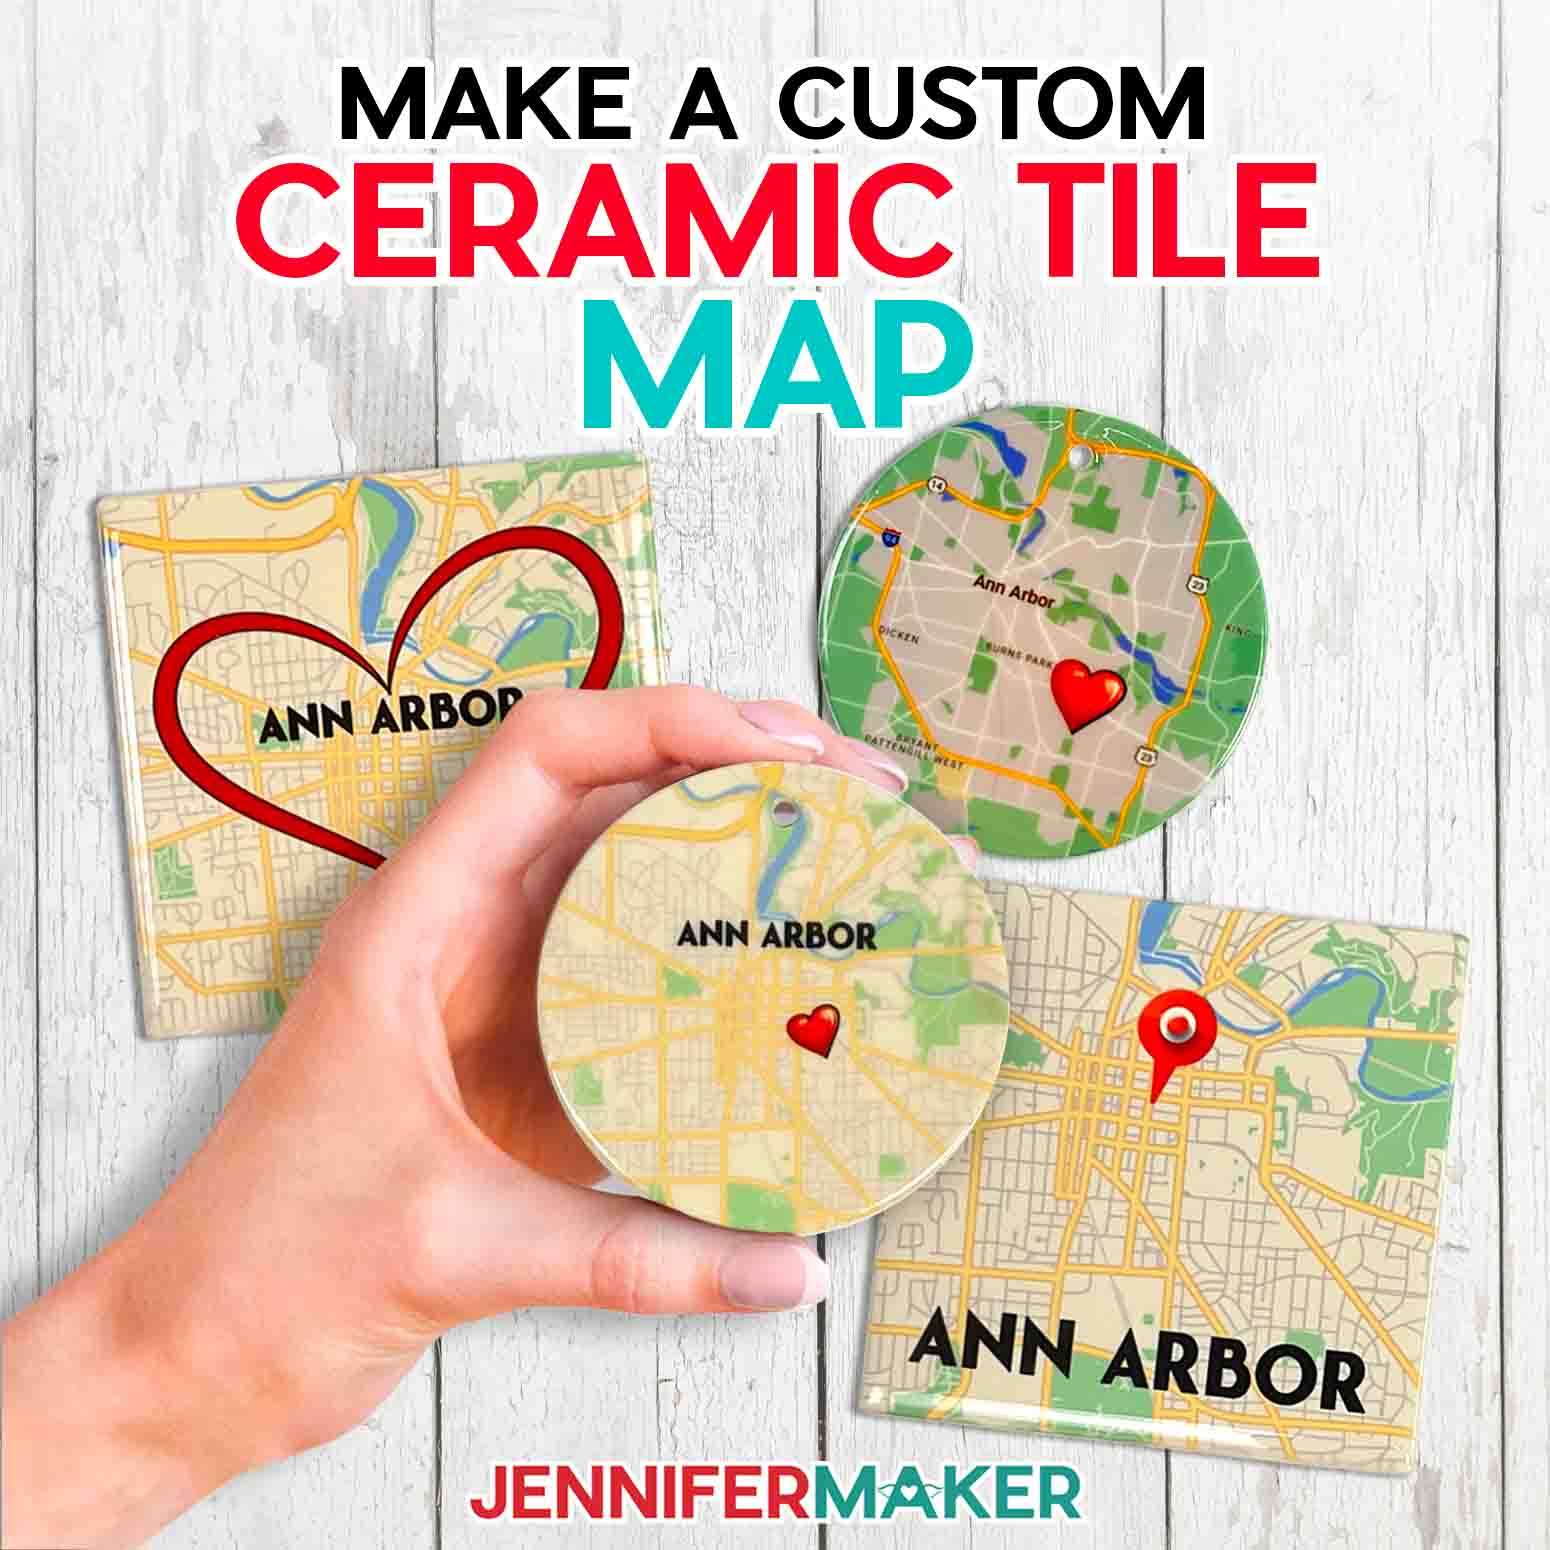 Sublimate a Ceramic Tile Map for a Custom Keepsake - Jennifer Maker